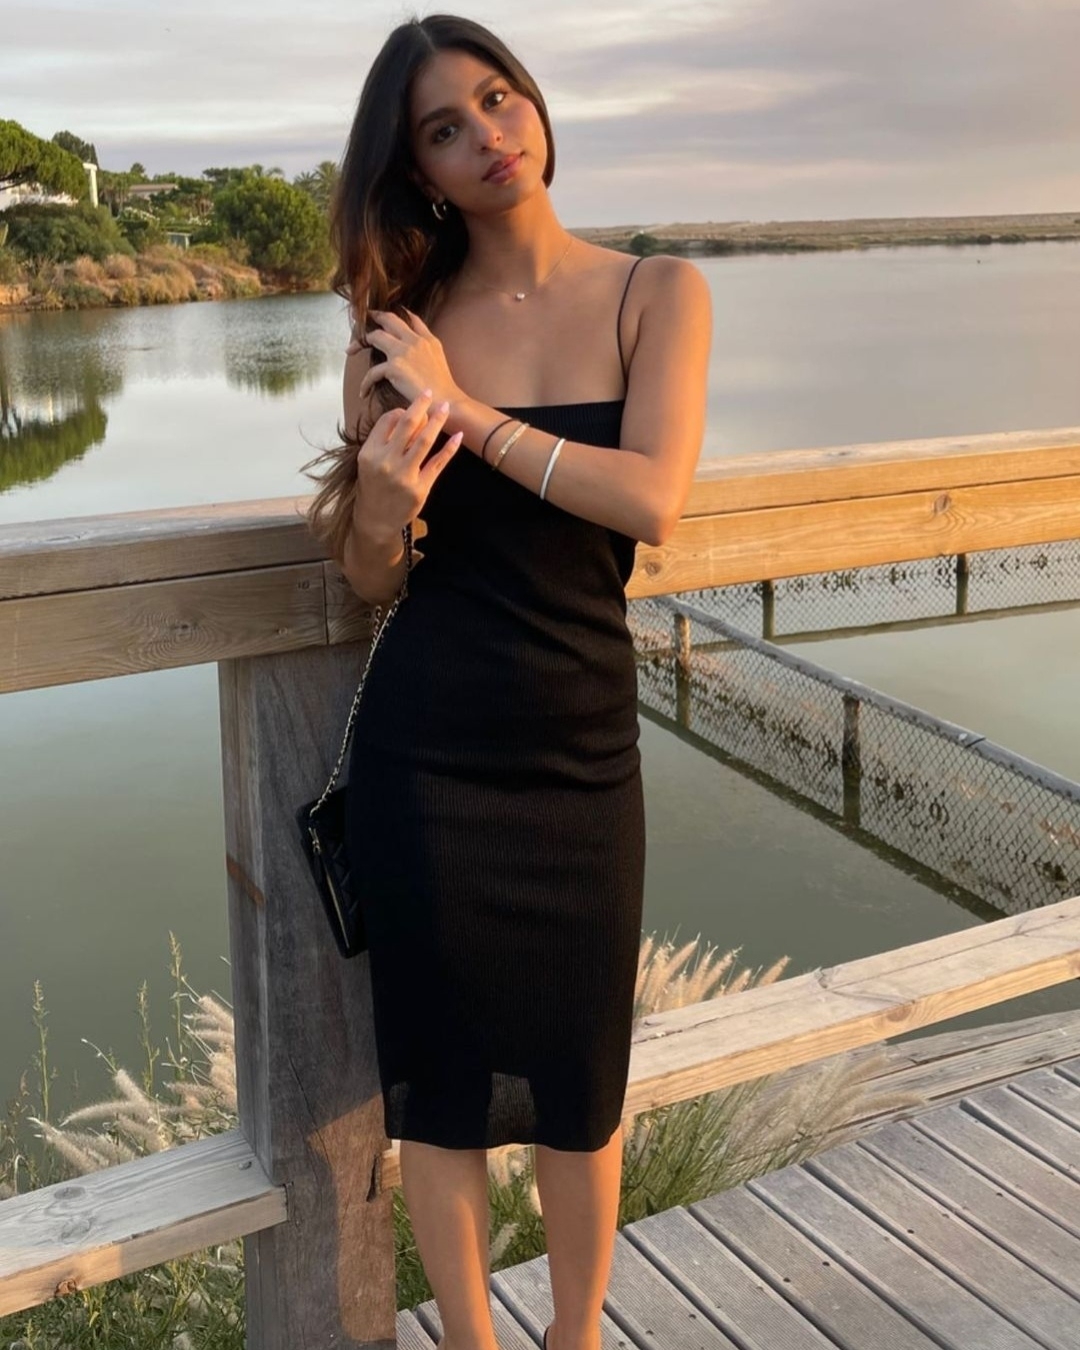 Suhana Khan looks gorgeous in the black dress against the sunset hues.